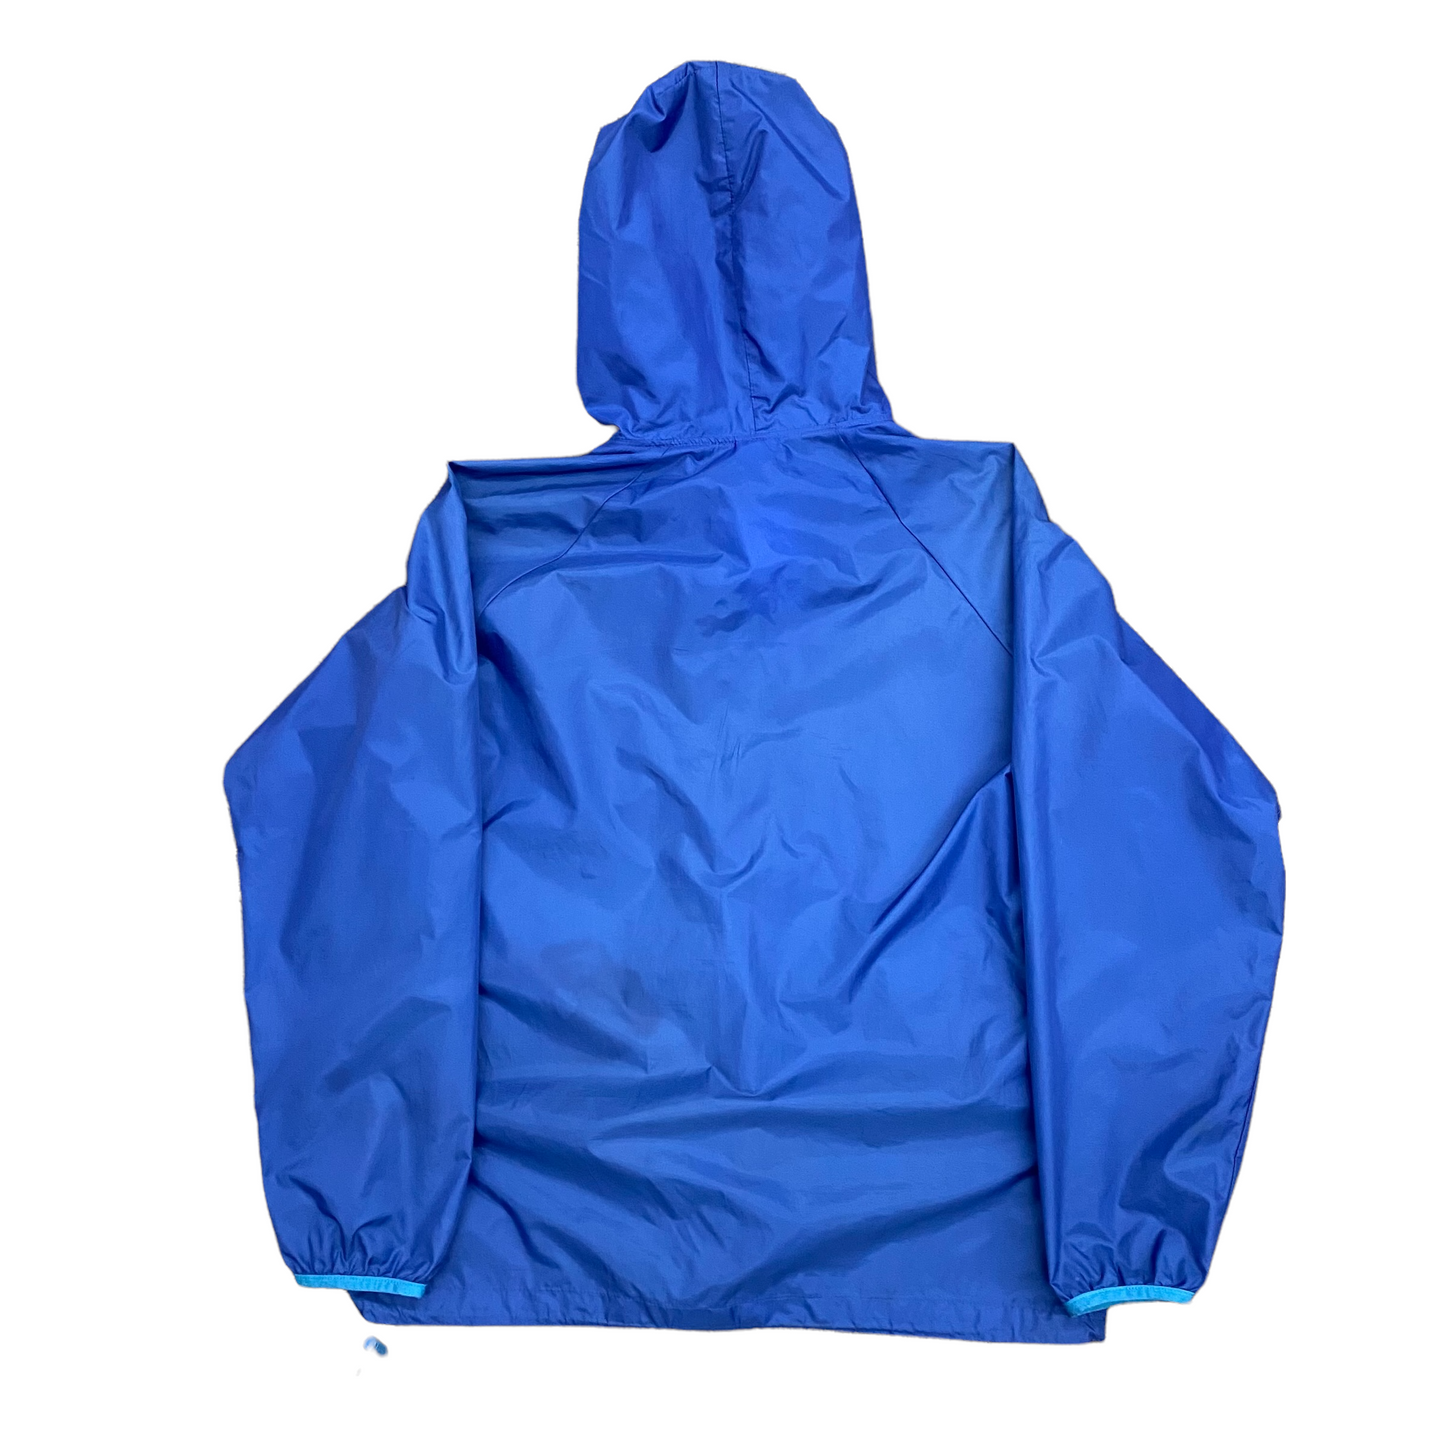 Vintage Sierra Designs Blue Anorak Jacket - Size Large